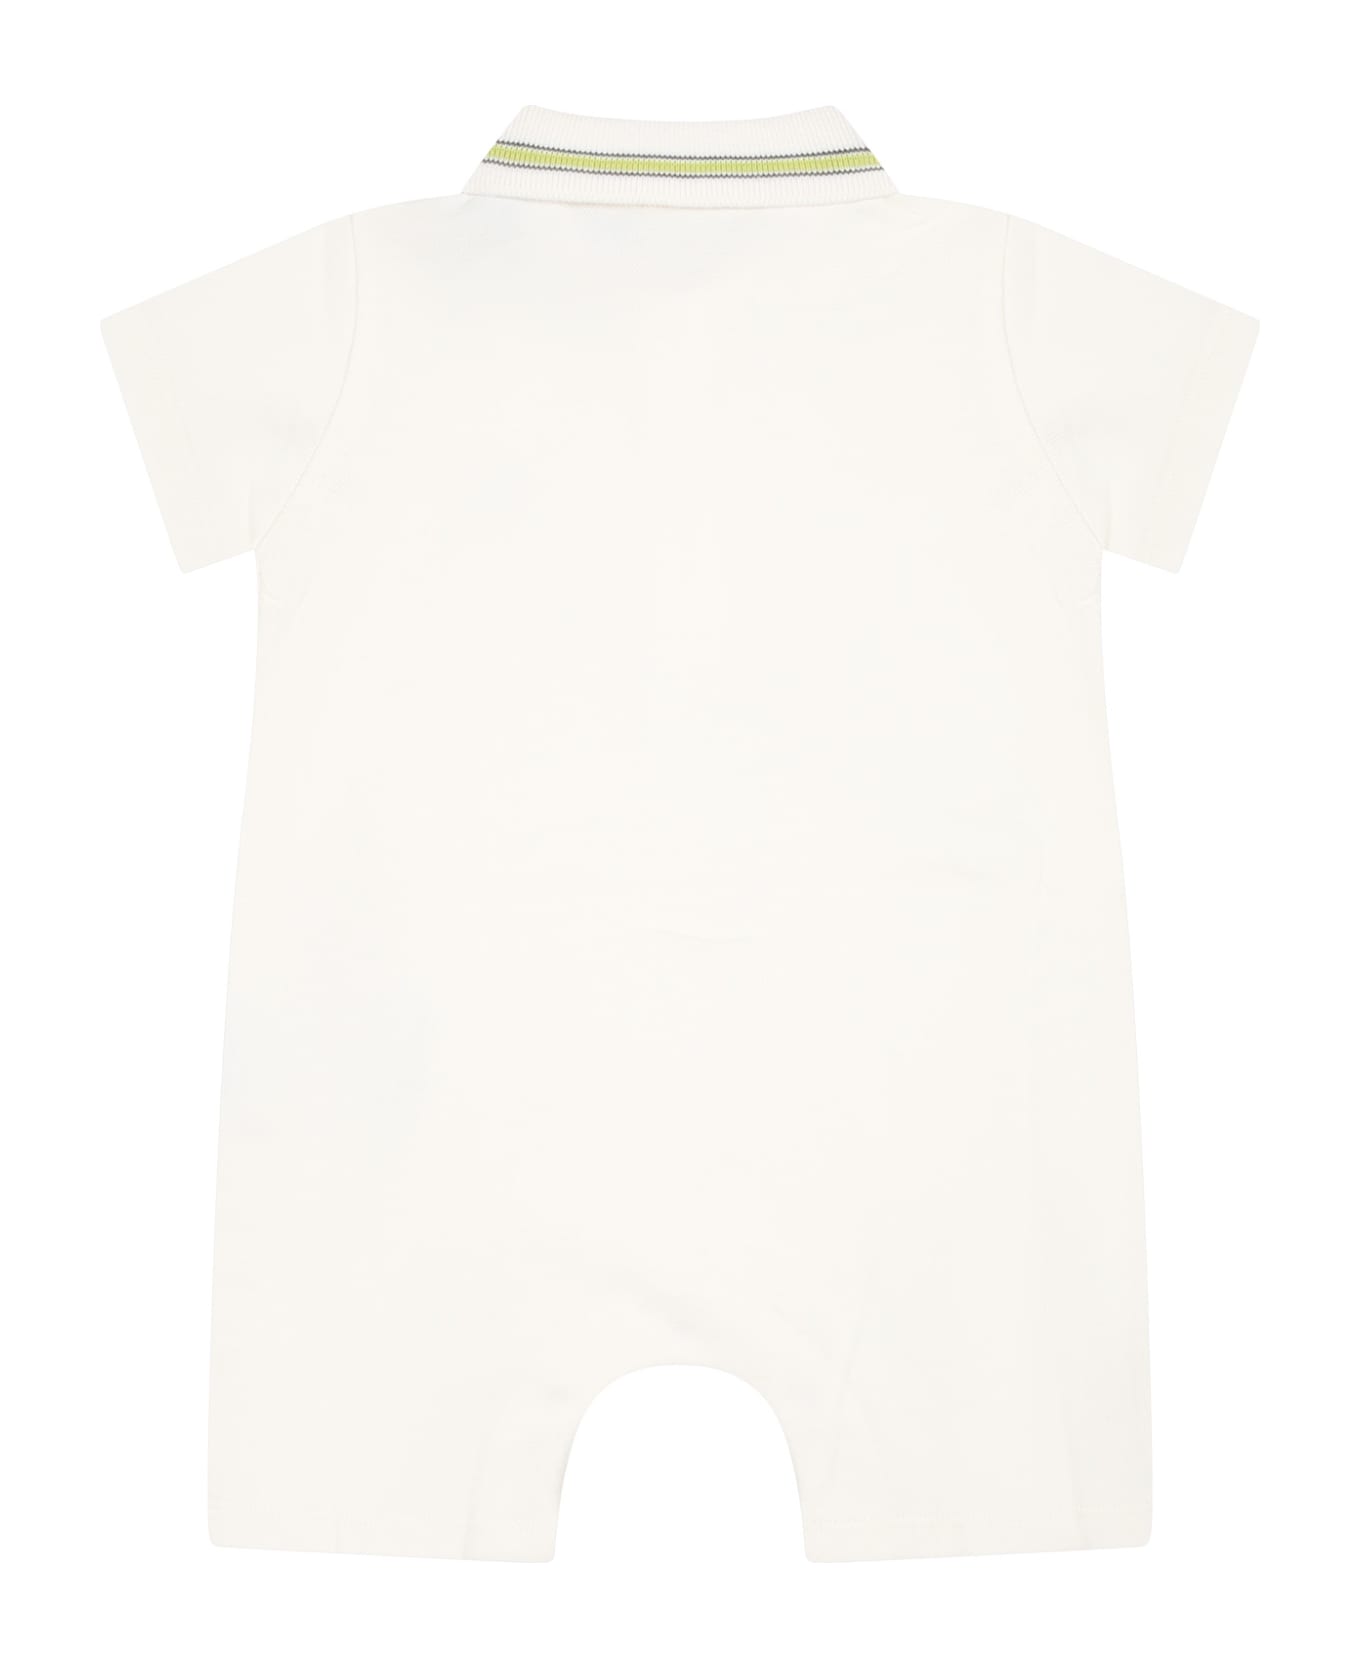 Moncler White Romper For Baby Kids With Logo - White